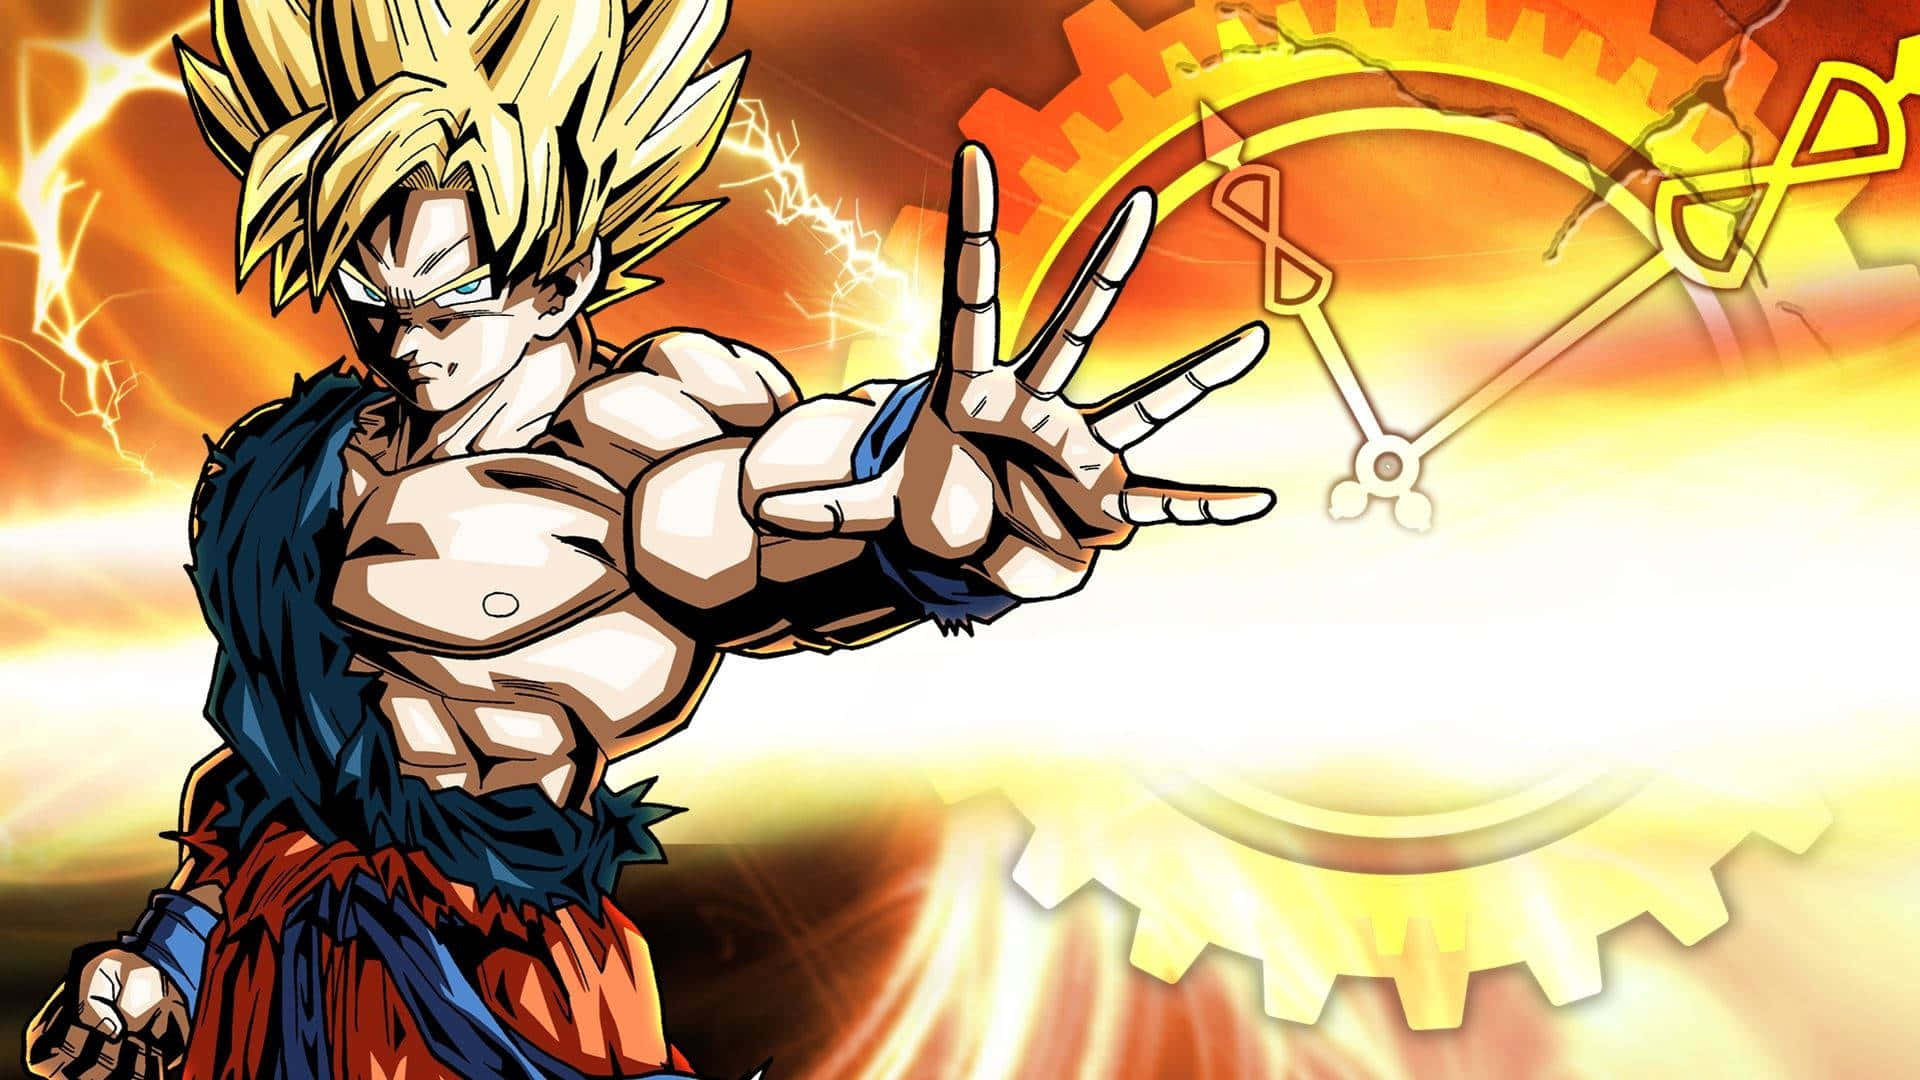 Super Saiyan Goku unleashes a powerful display of energy. Wallpaper